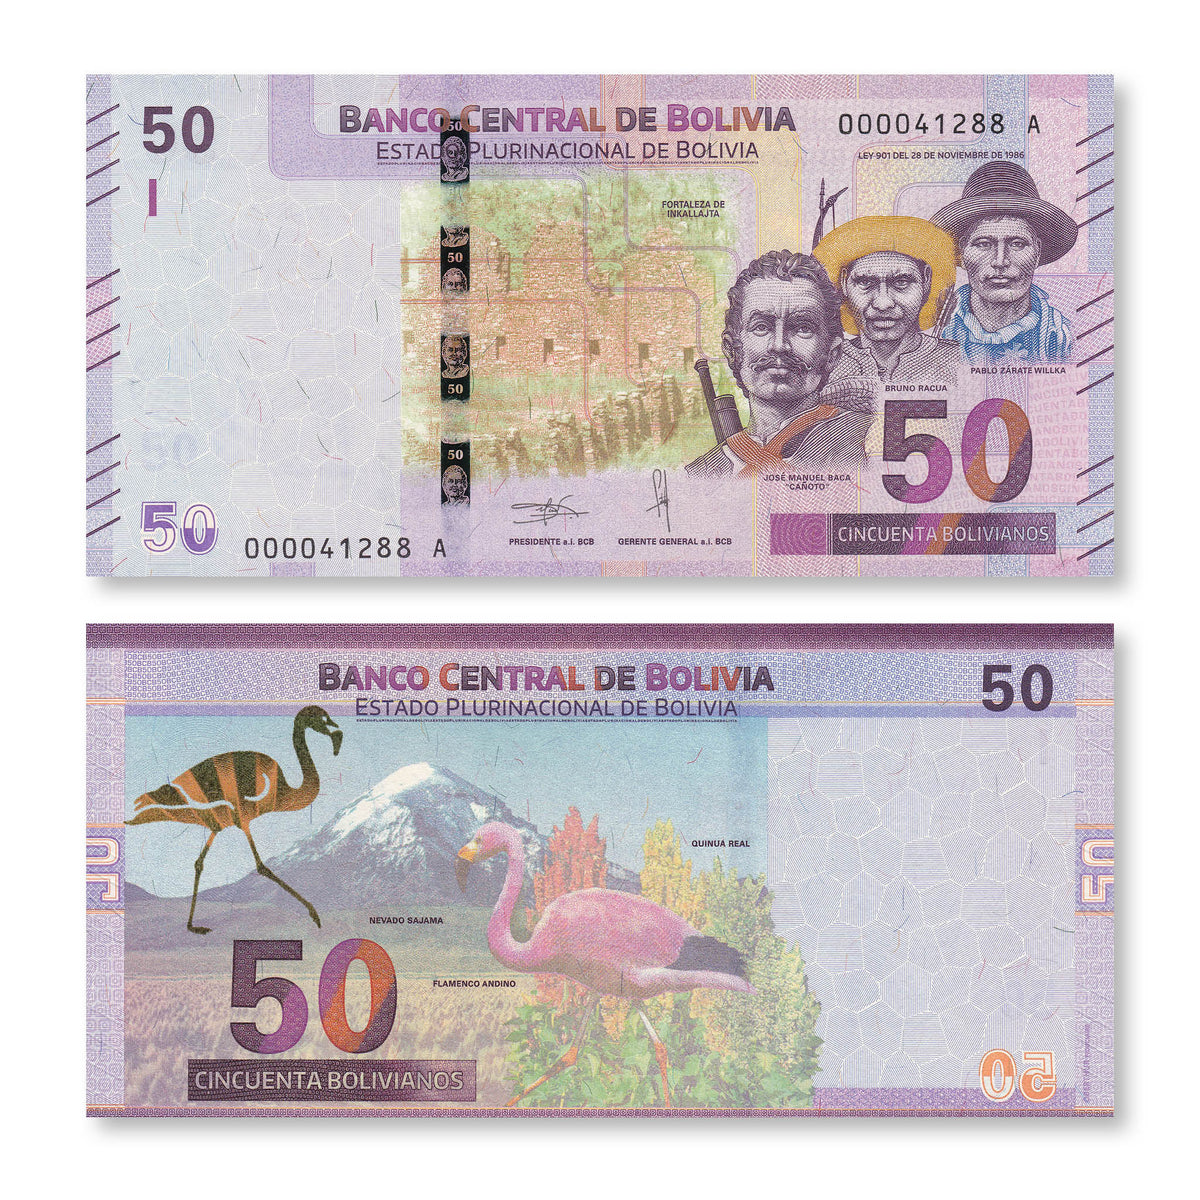 Bolivia 50 Bolivianos, 2018, B419a, UNC - Robert's World Money - World Banknotes